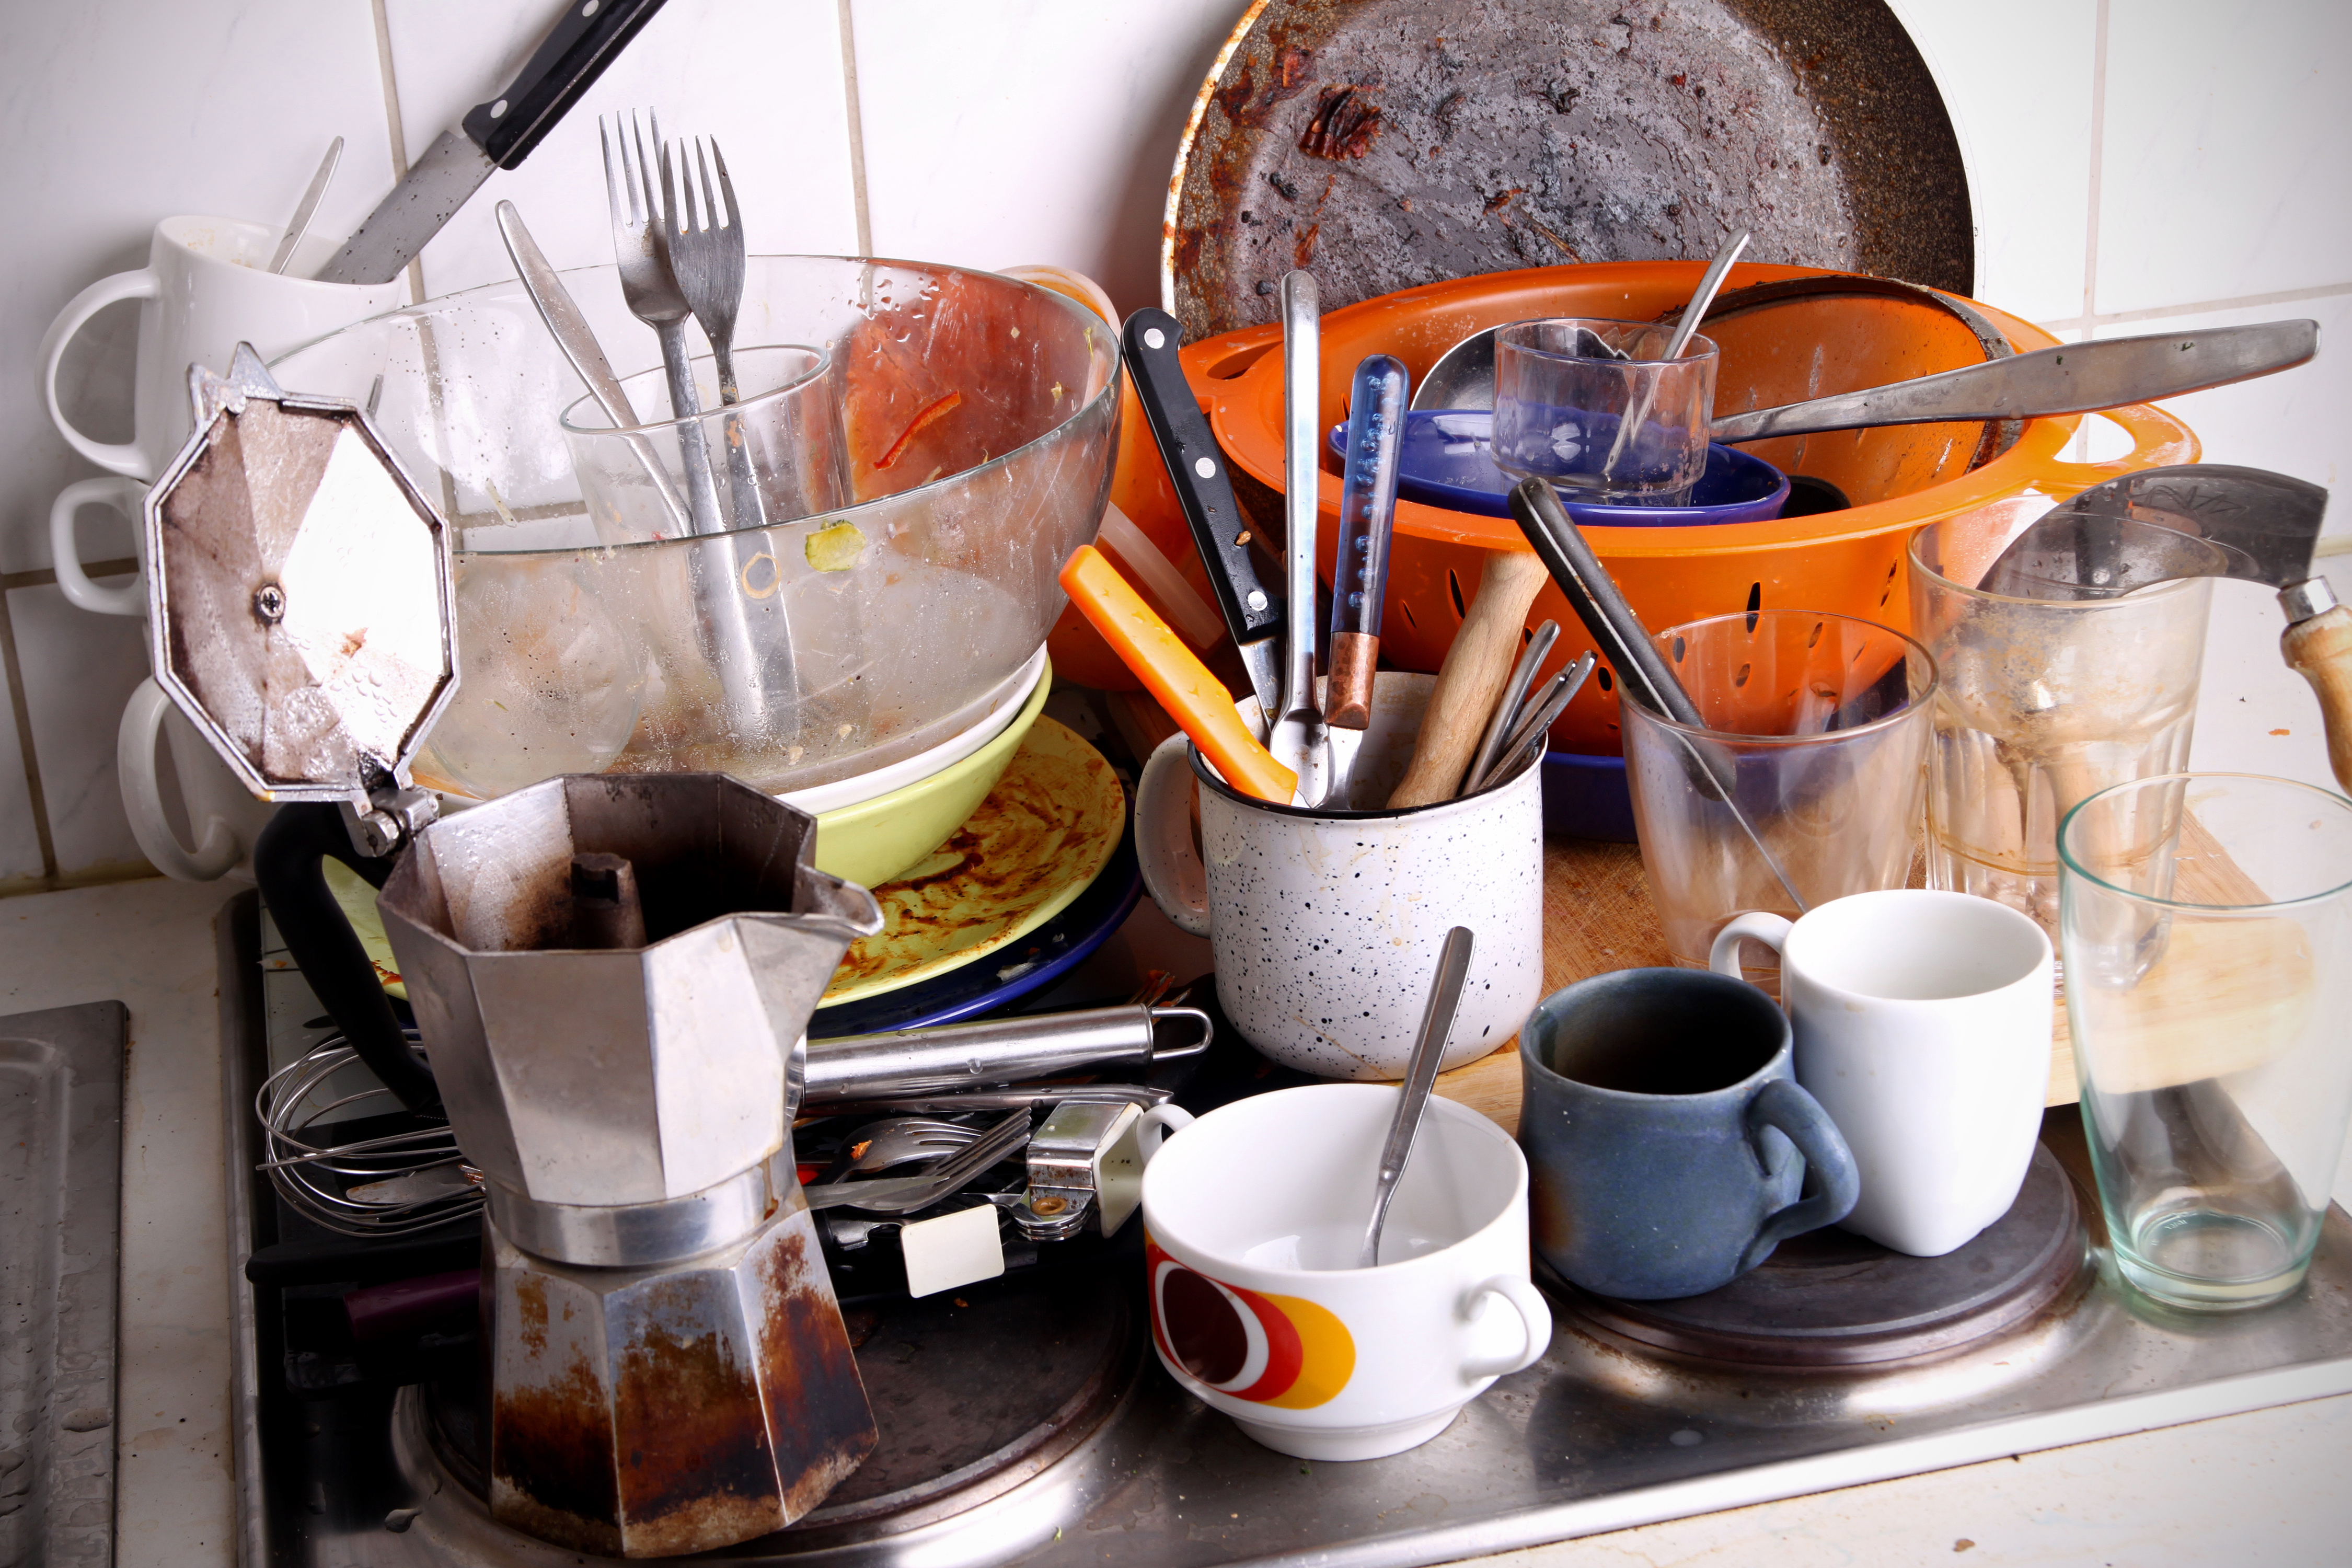 Dirty dishes. Грязная посуда. Гора грязной посуды. Гора немытой посуды. Посуда для кухни.